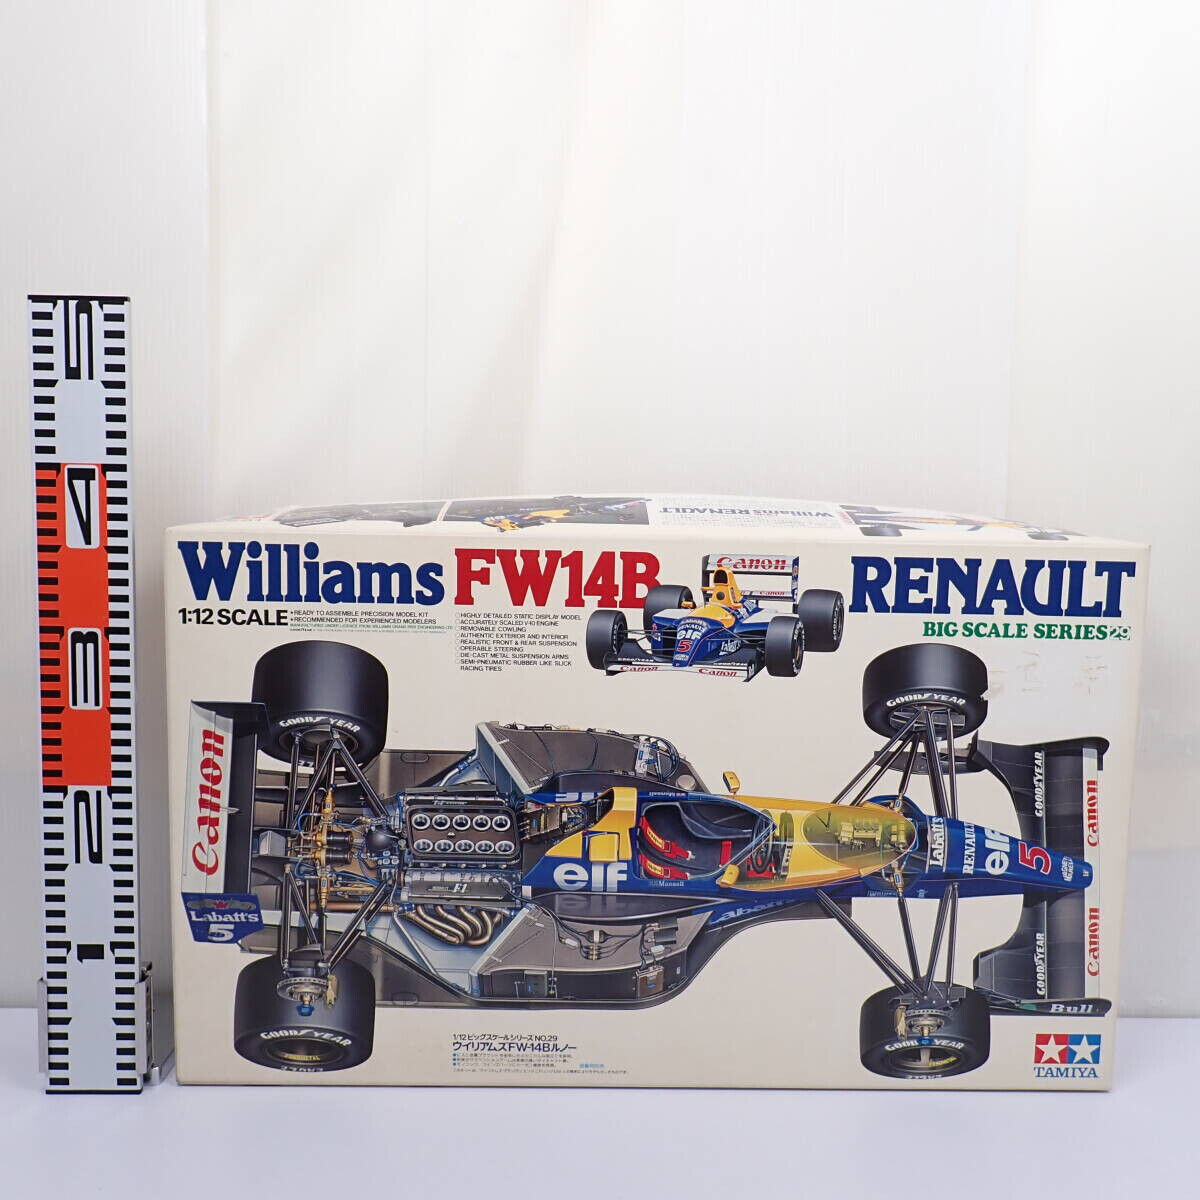 Tamiya Williams FW14B Renault 1/12 scale #1992 World Champion Plastic Model Kit